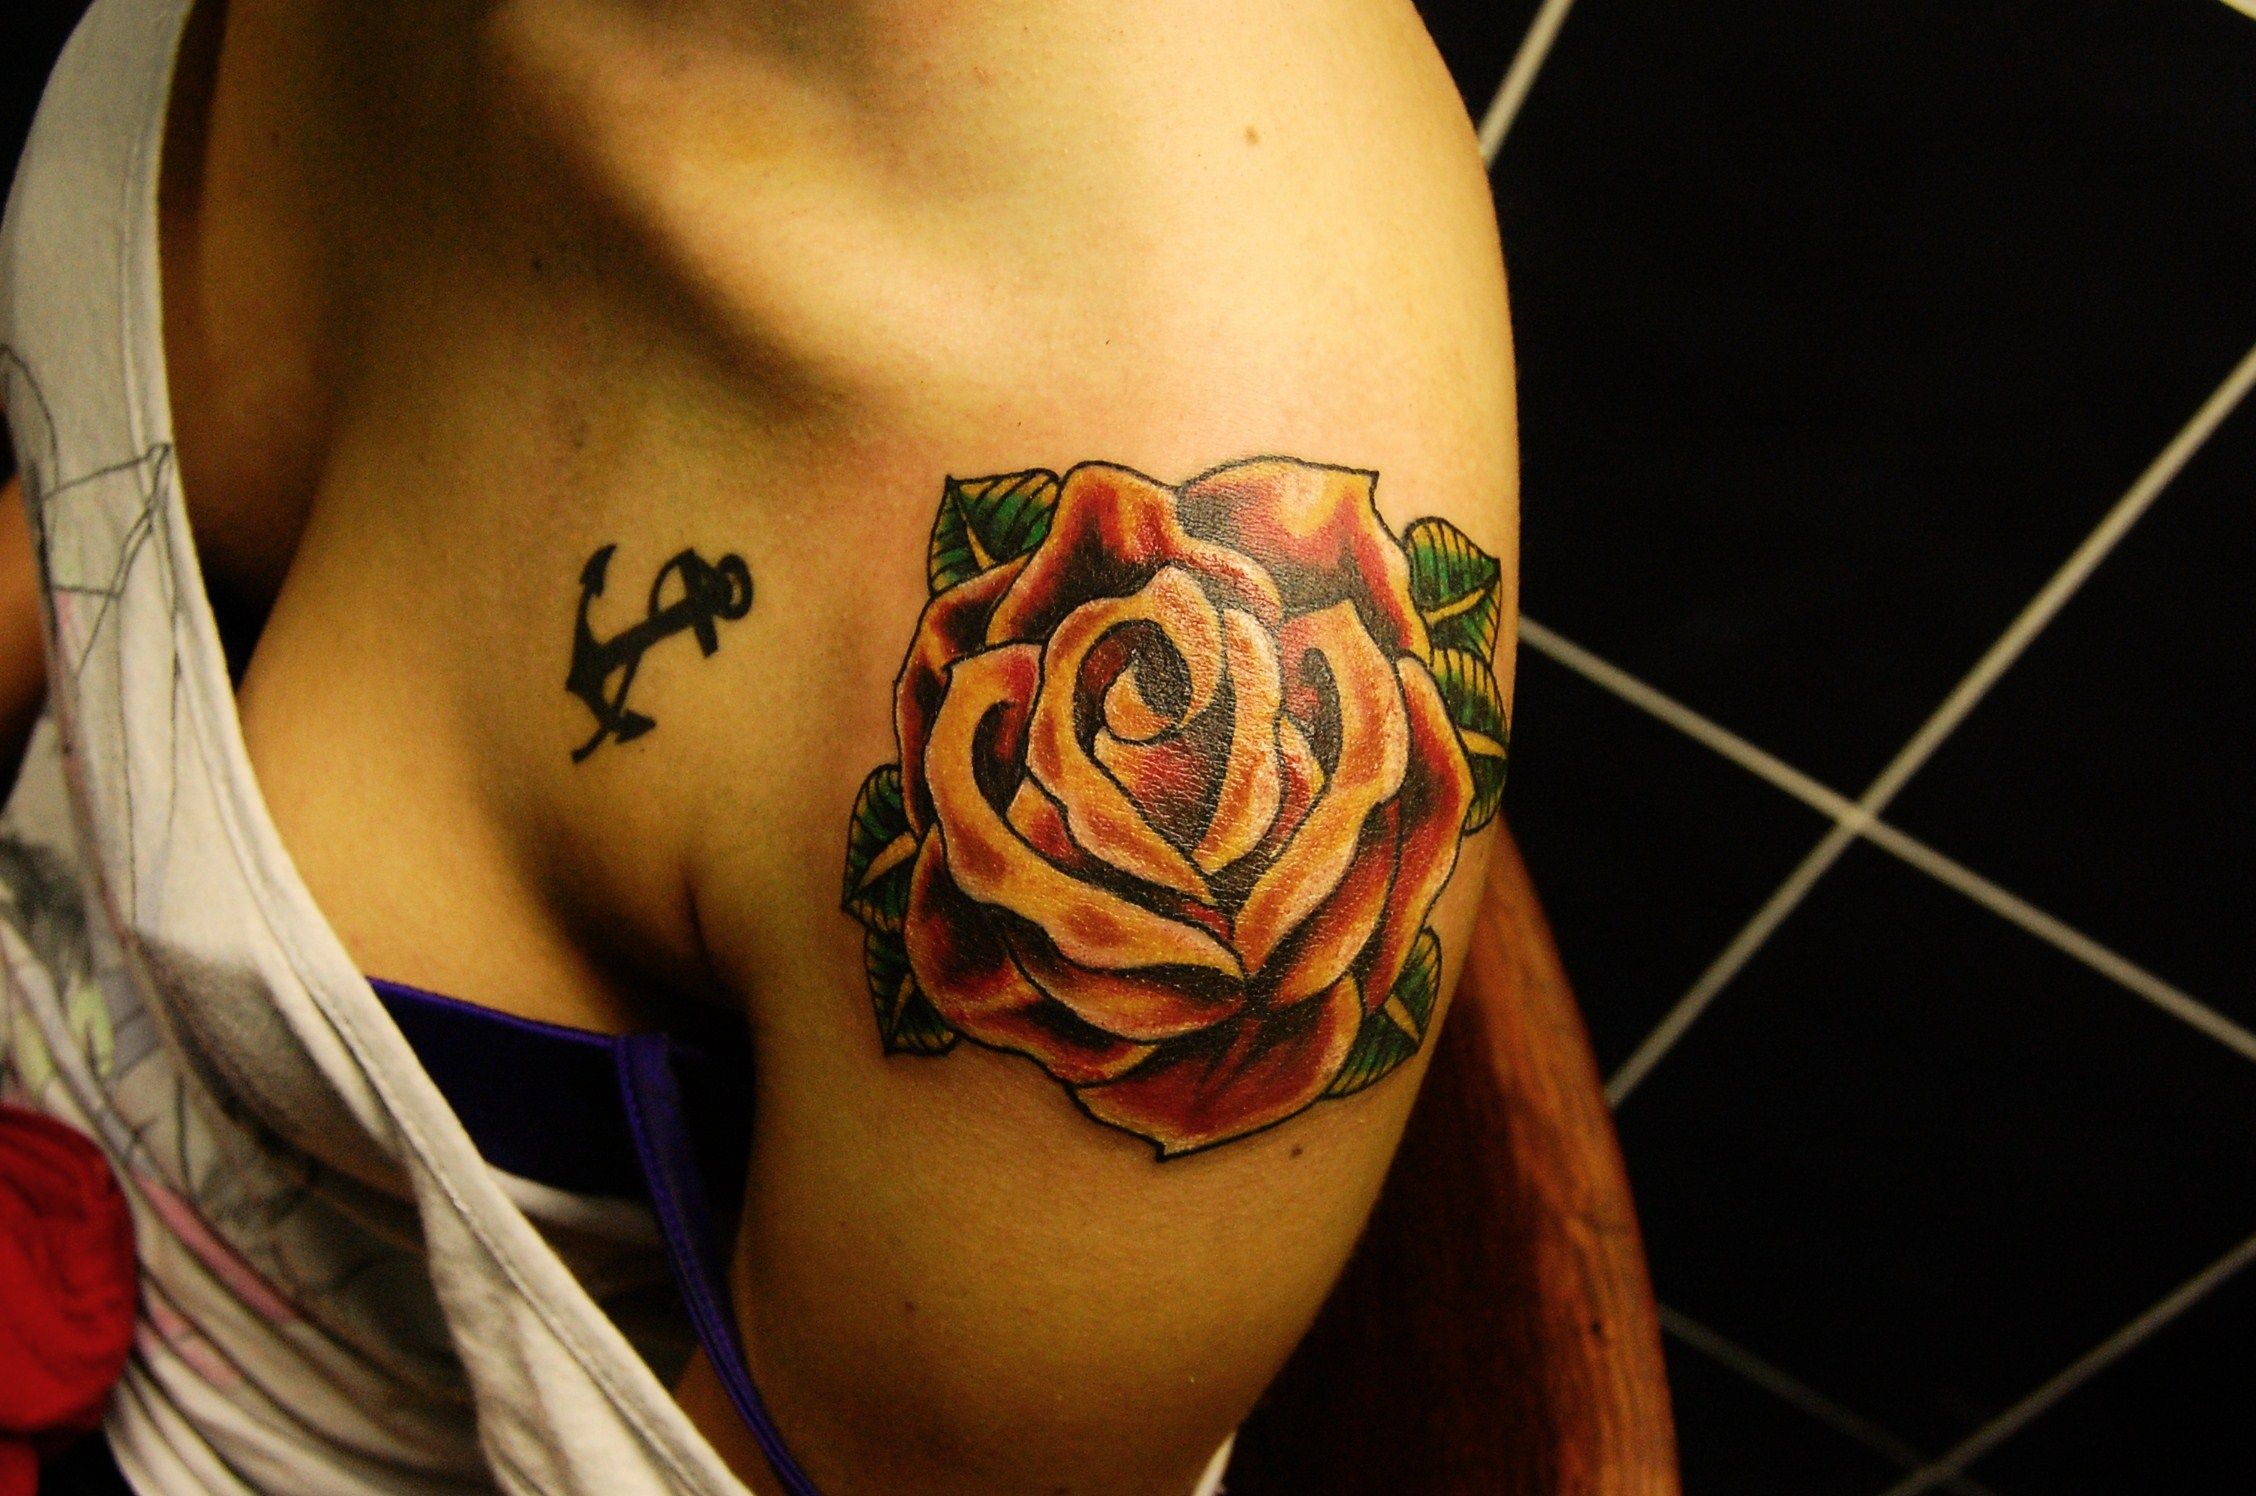 Татуировка роза